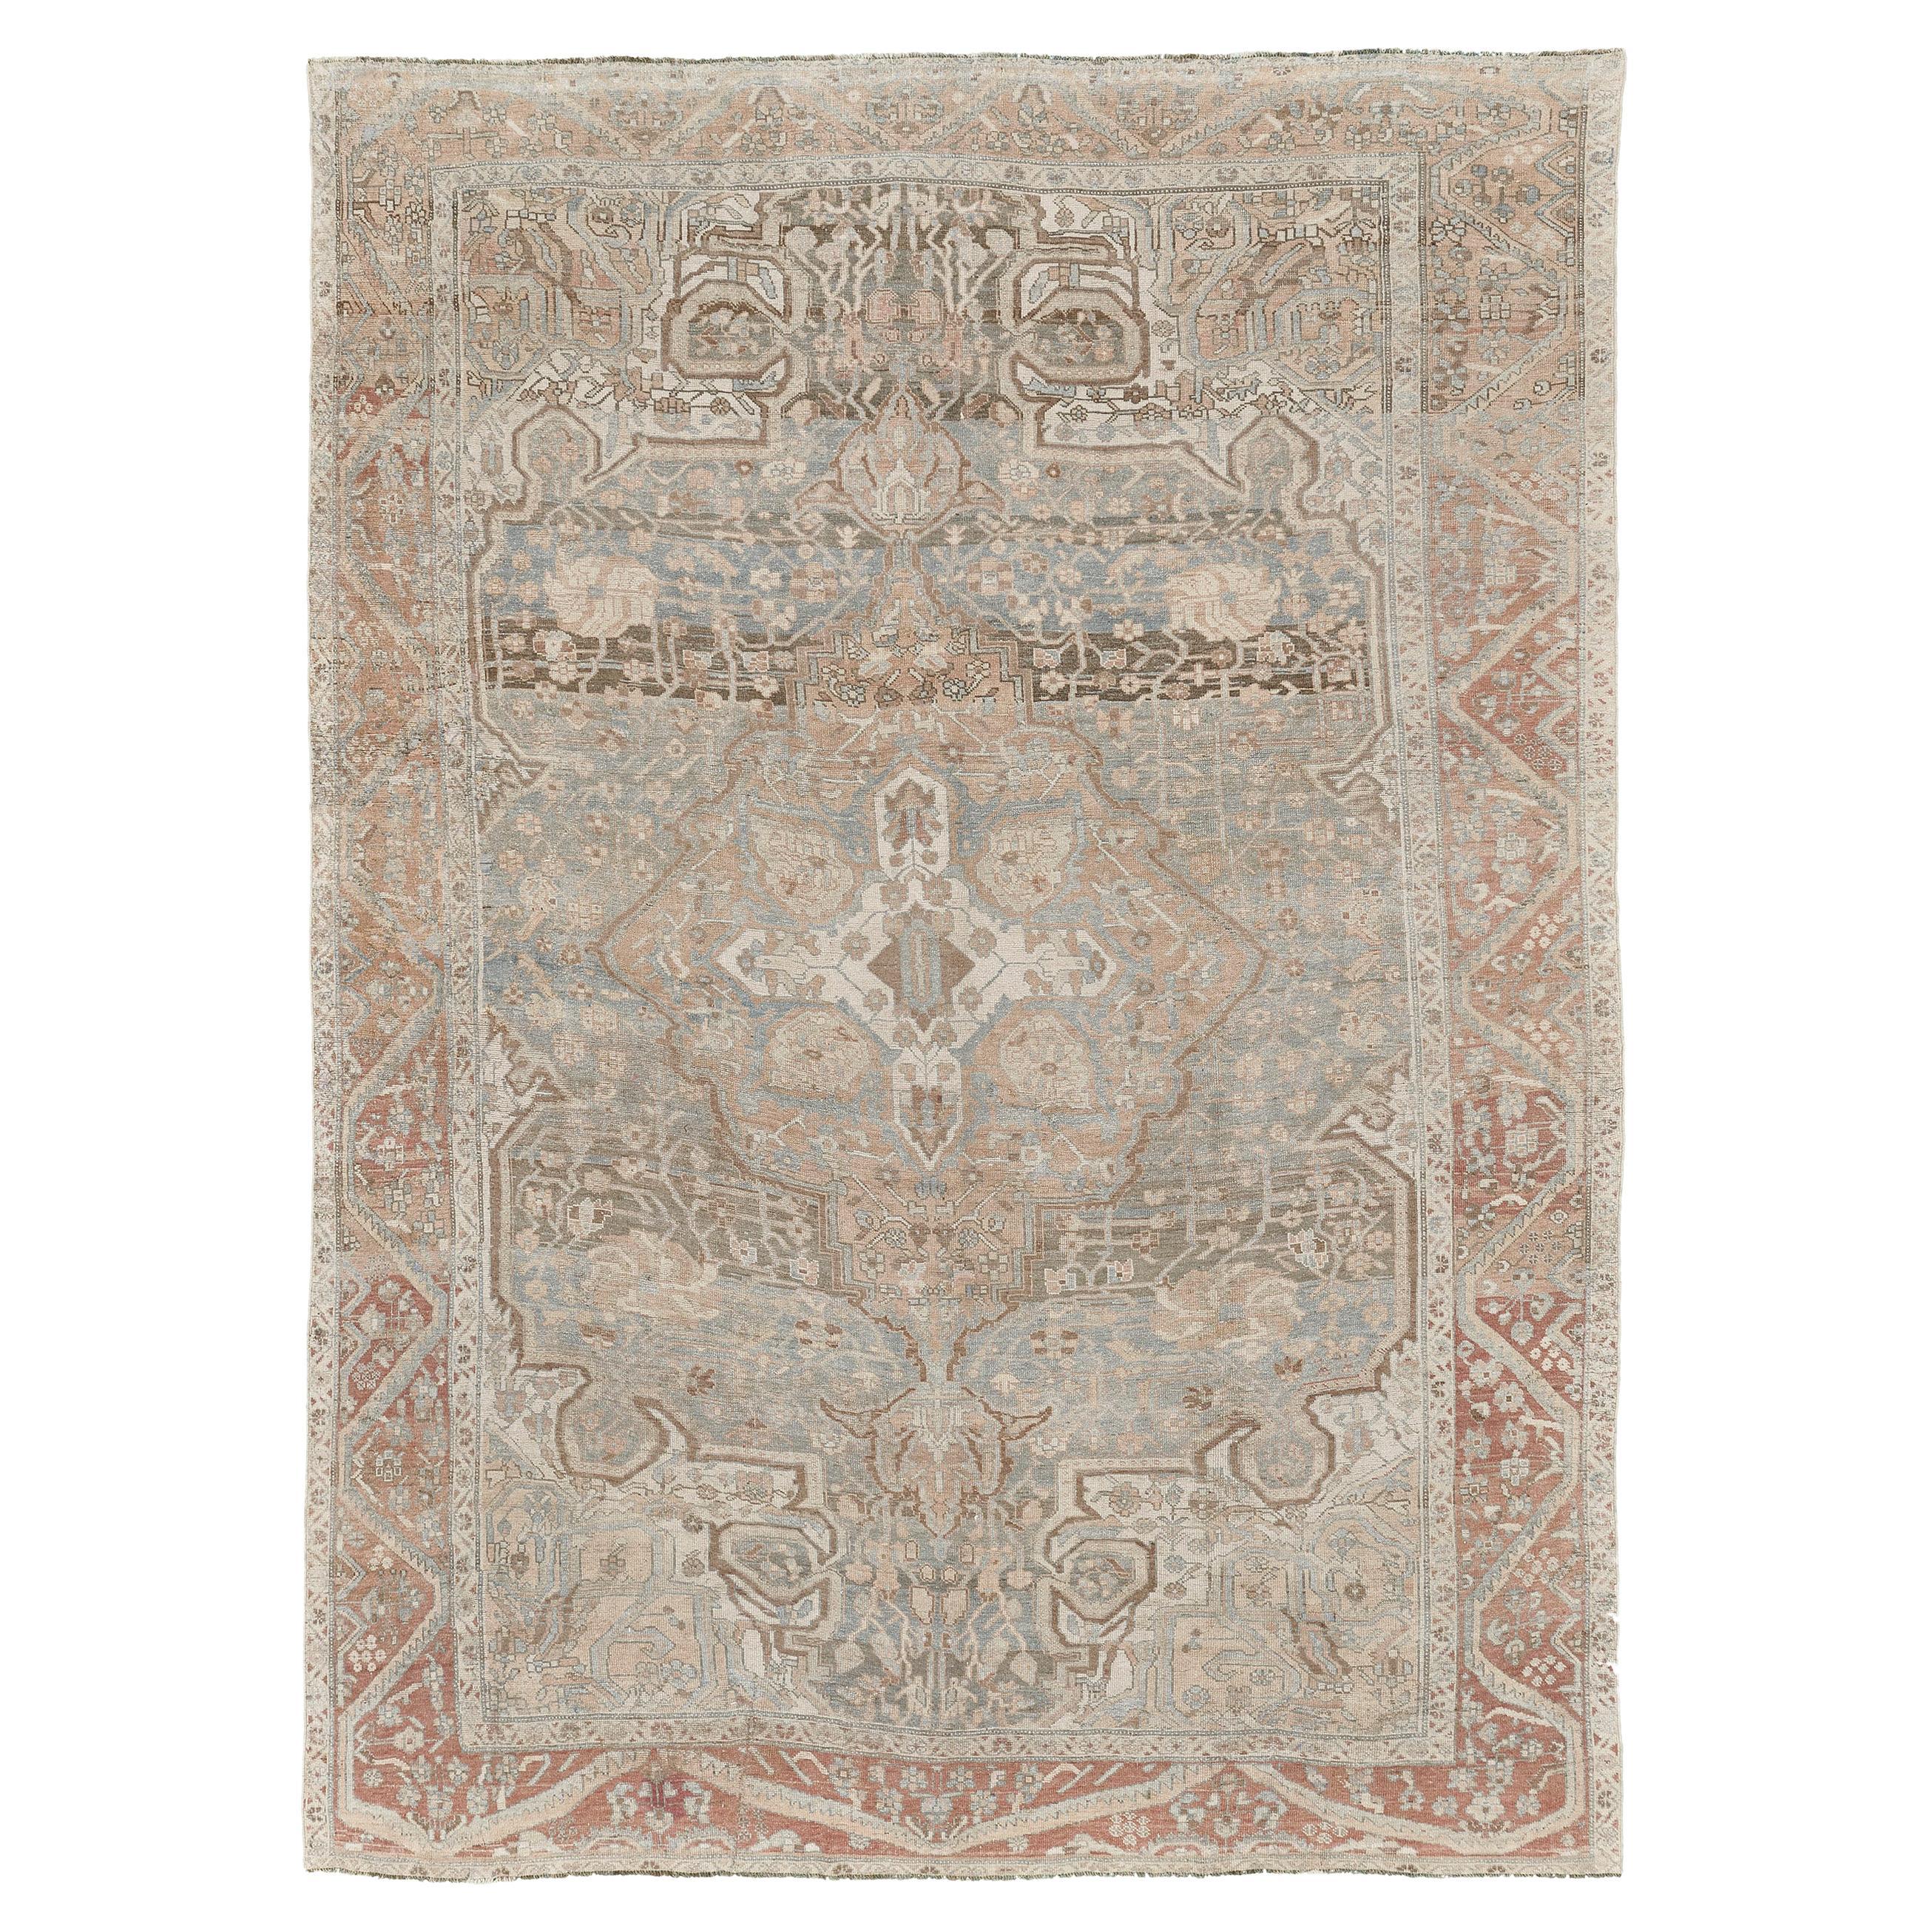 Antique Persian Bakhtiar Rug